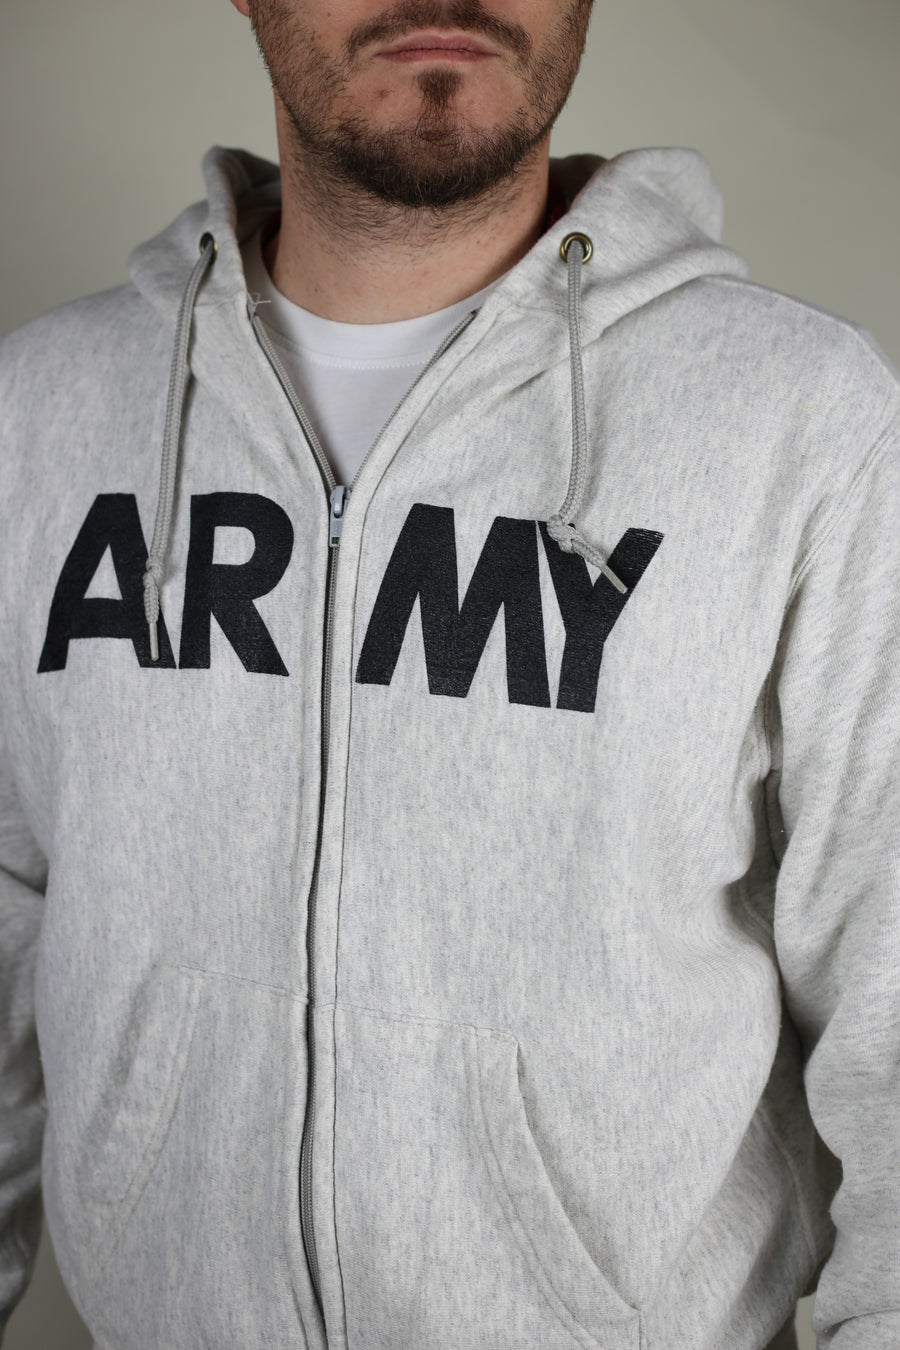 Us Army Training zip sweatshirt